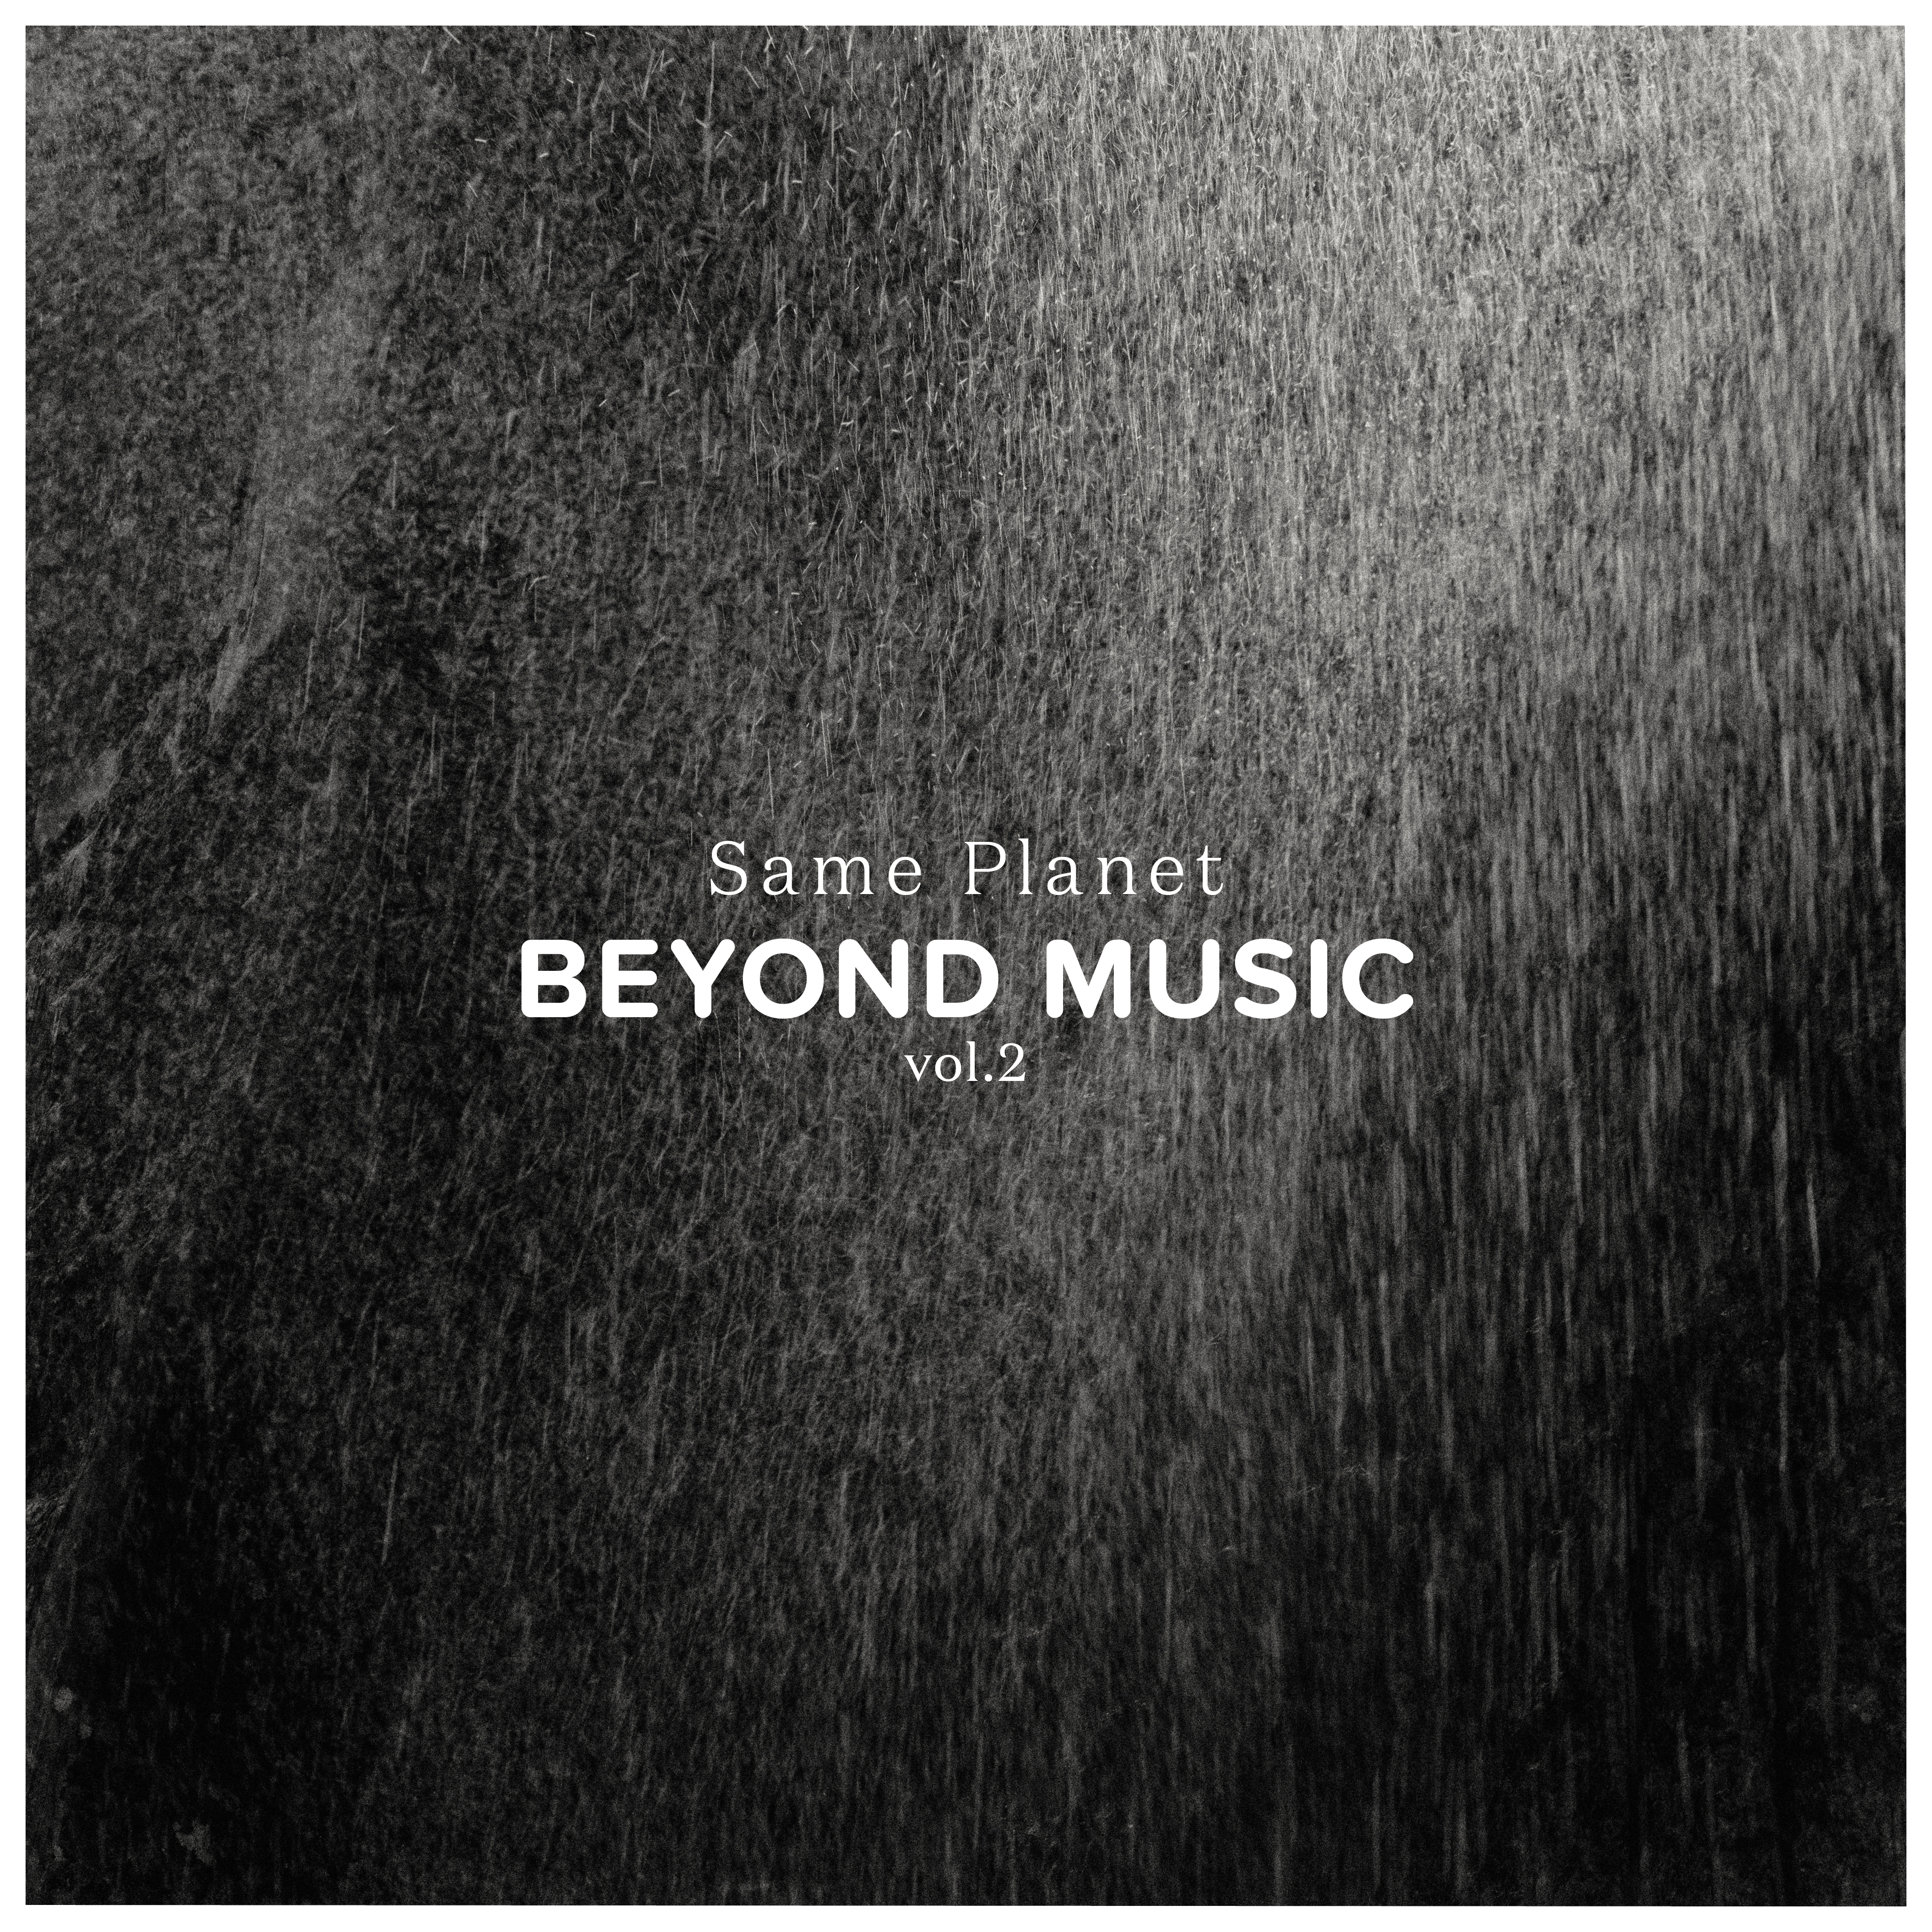 Beyond Music Vol.2 SAME PLANET, album cover